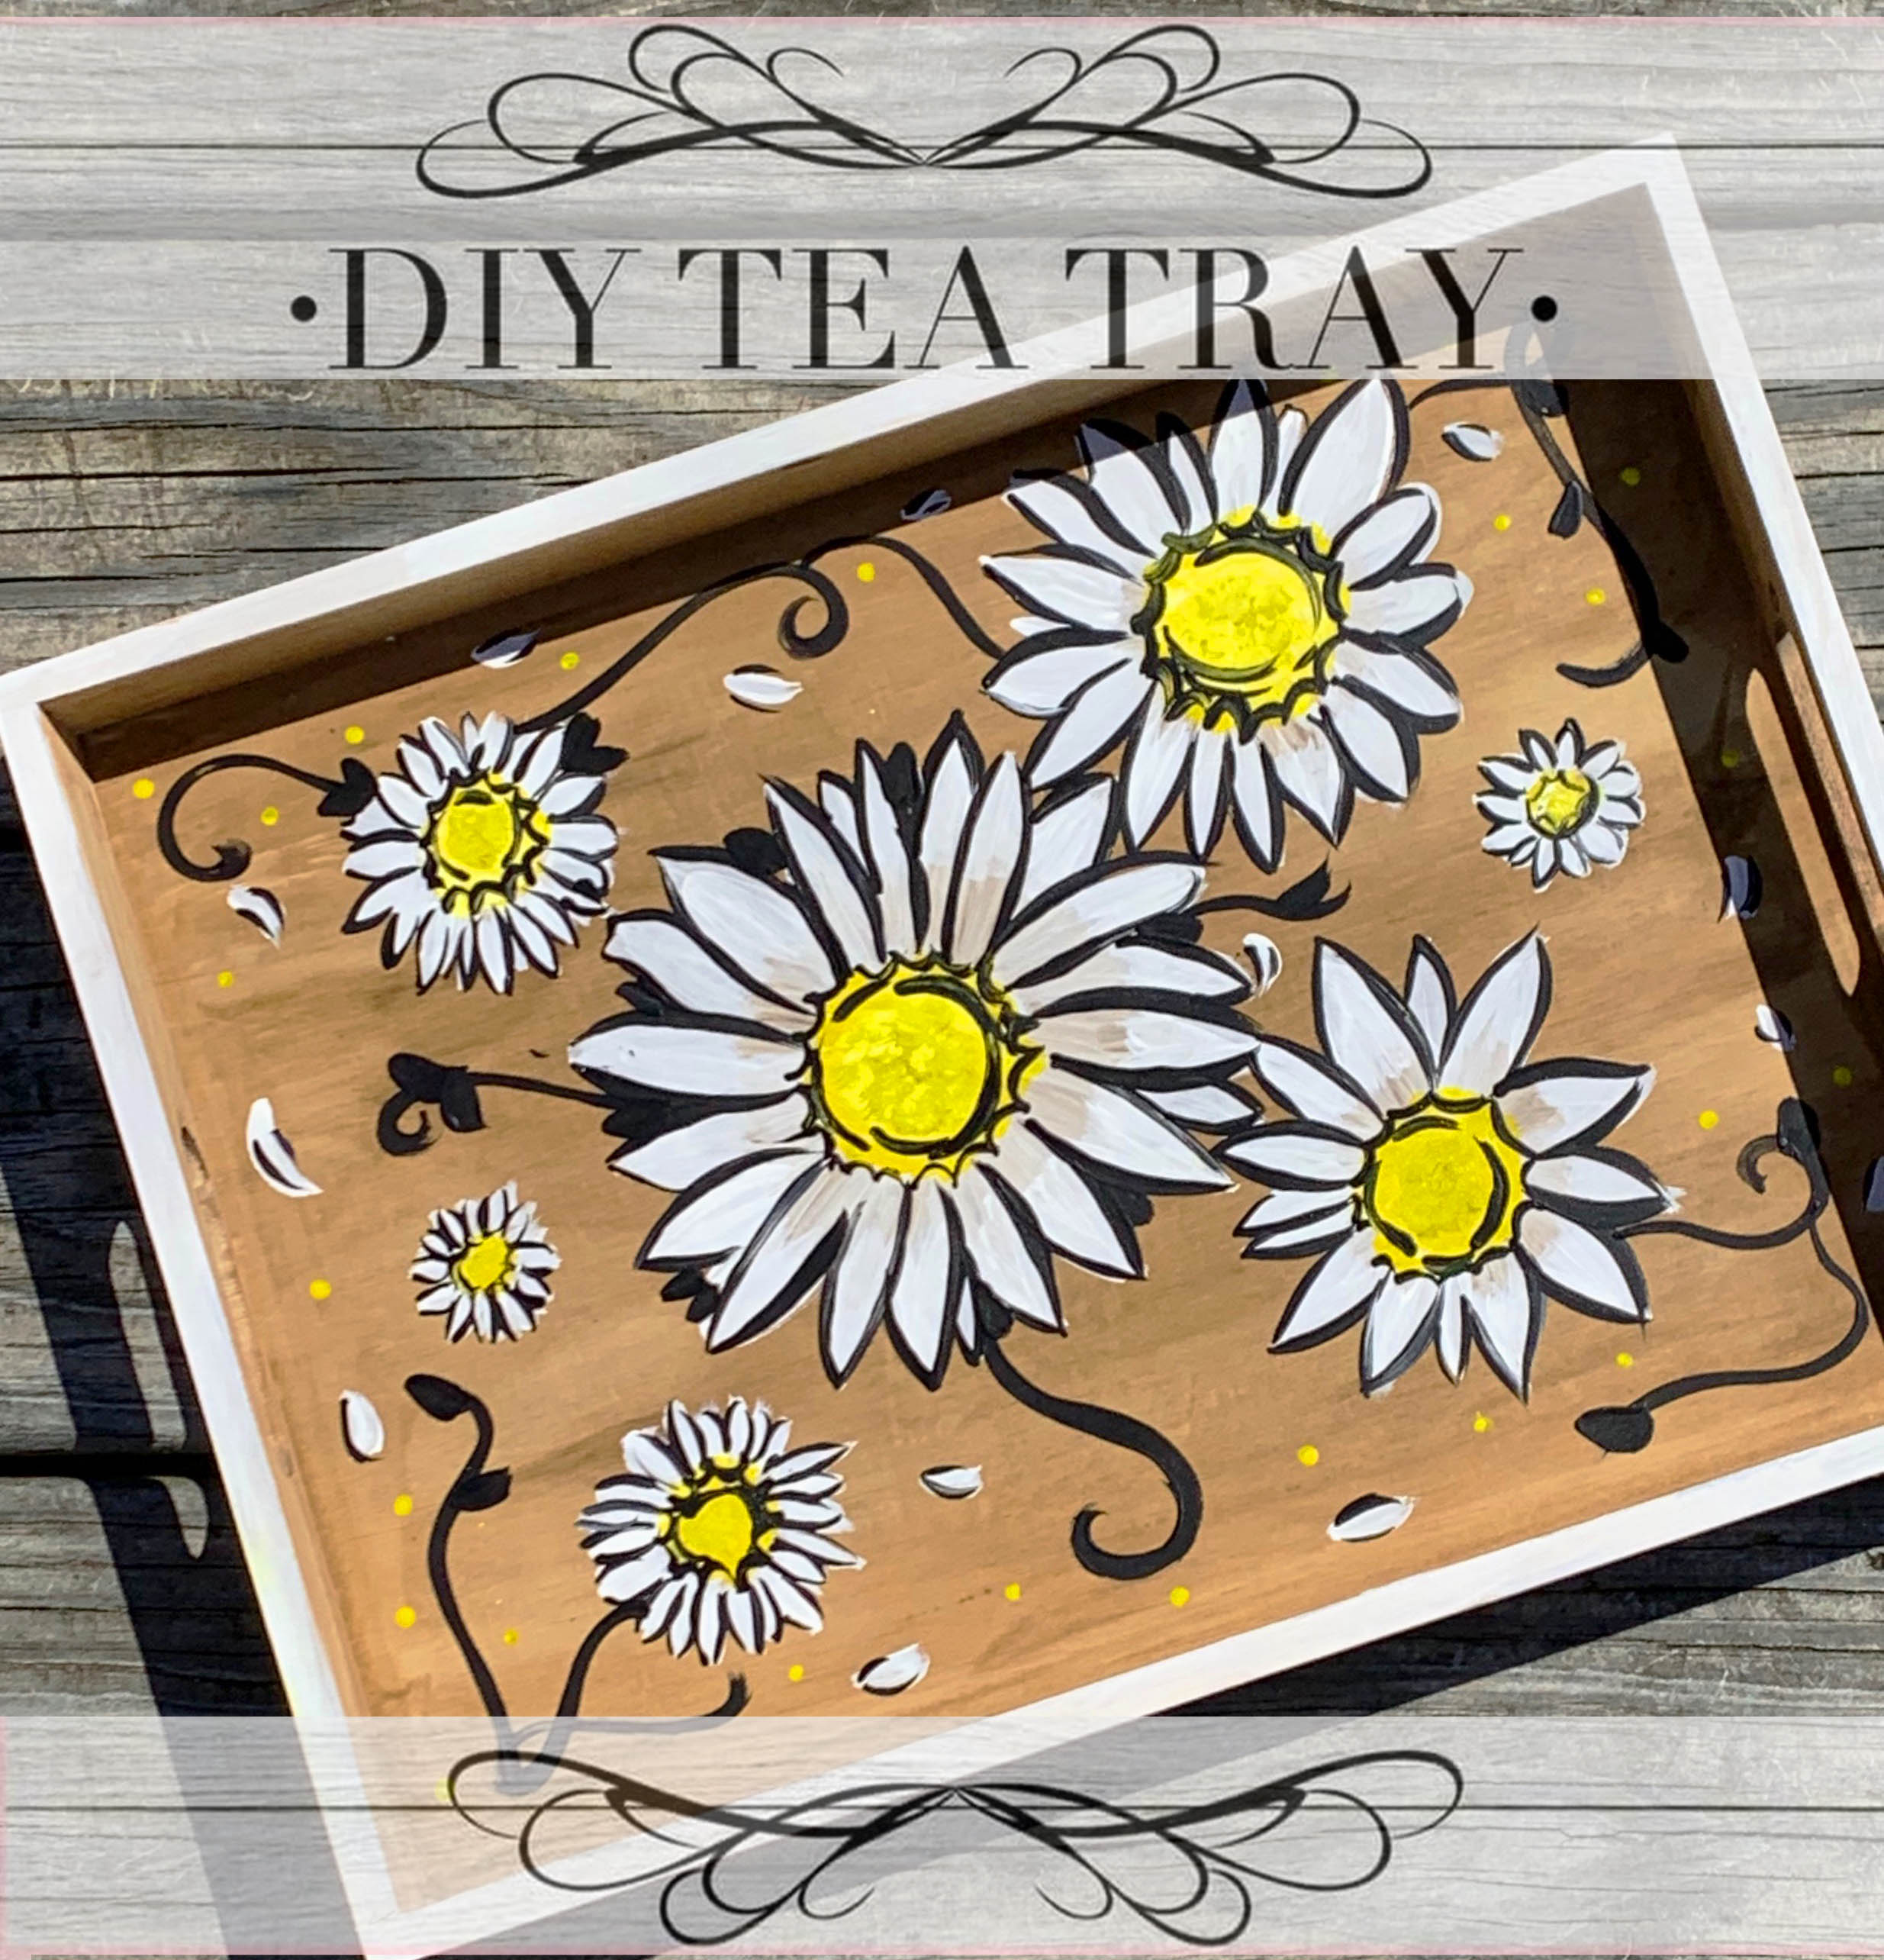 Vintage Daisy Tray - Take home art kit